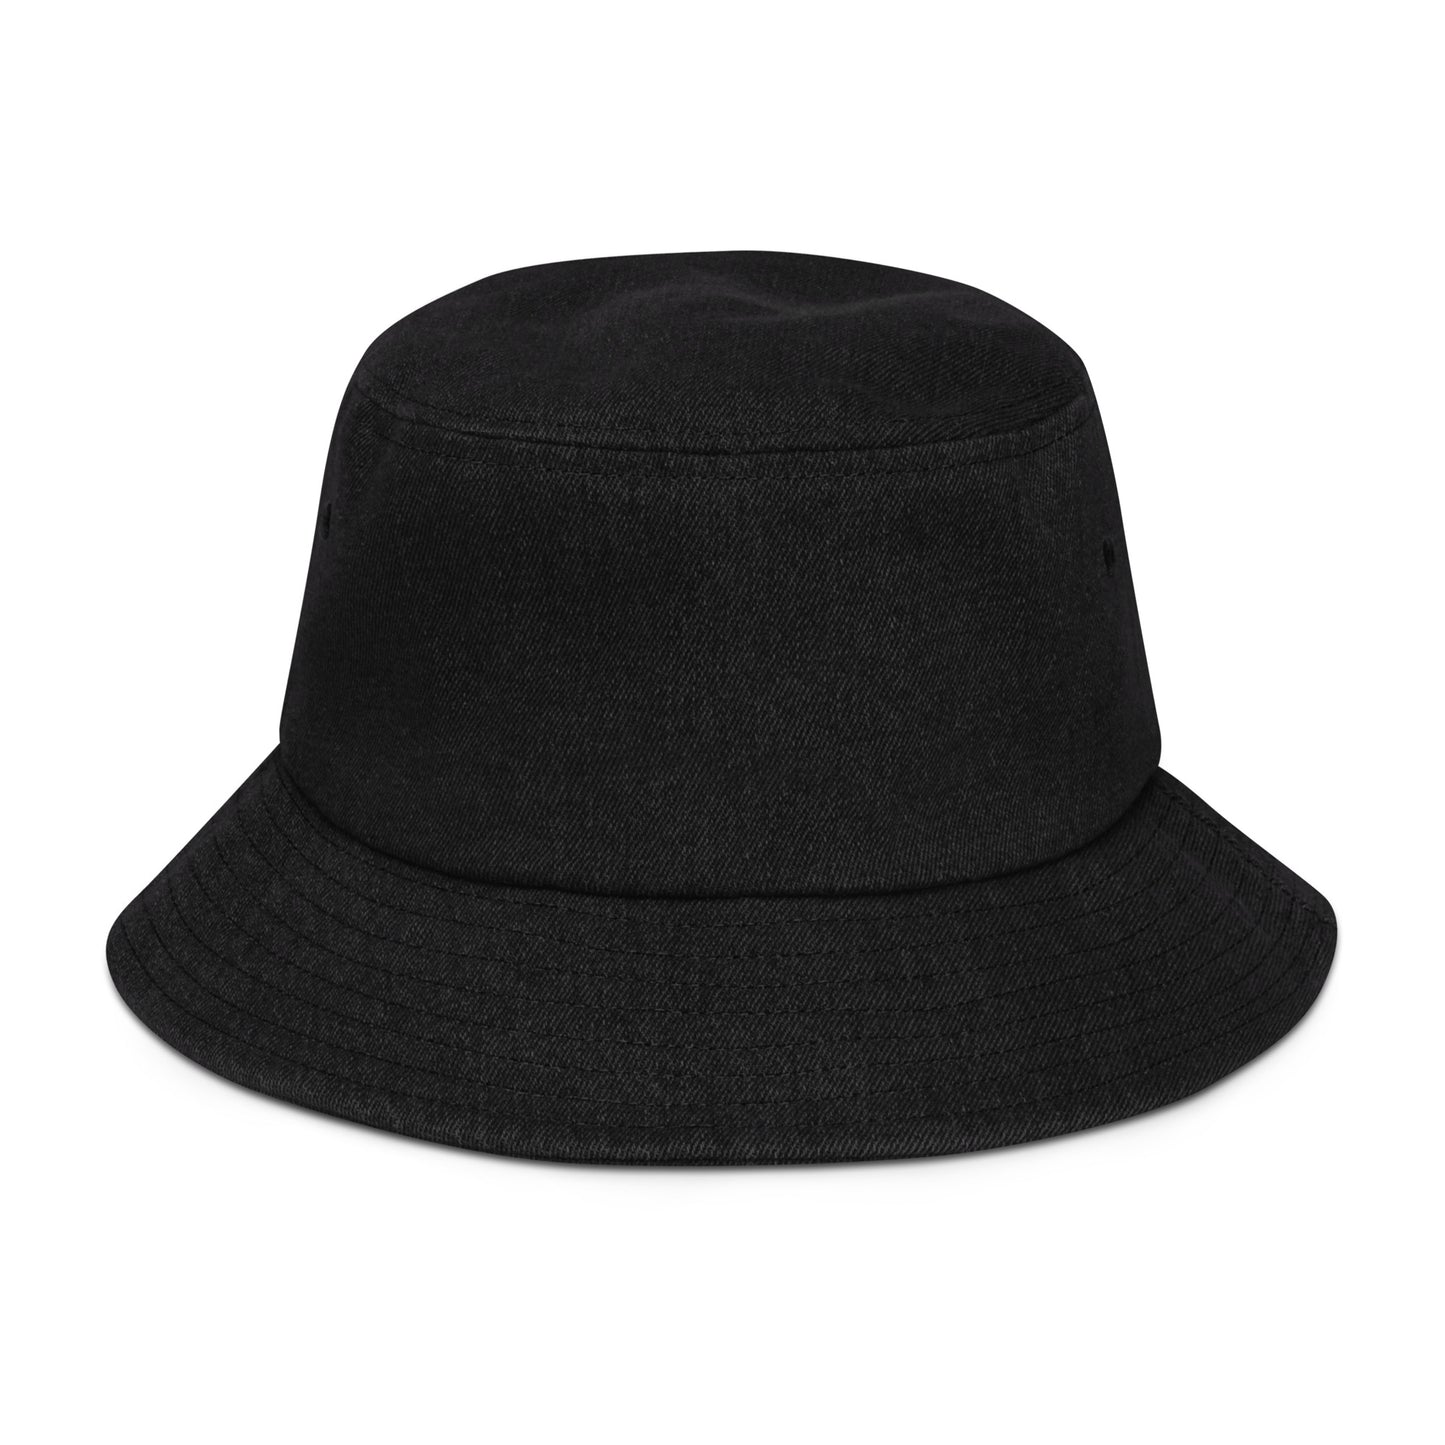 ATL Denim bucket hat